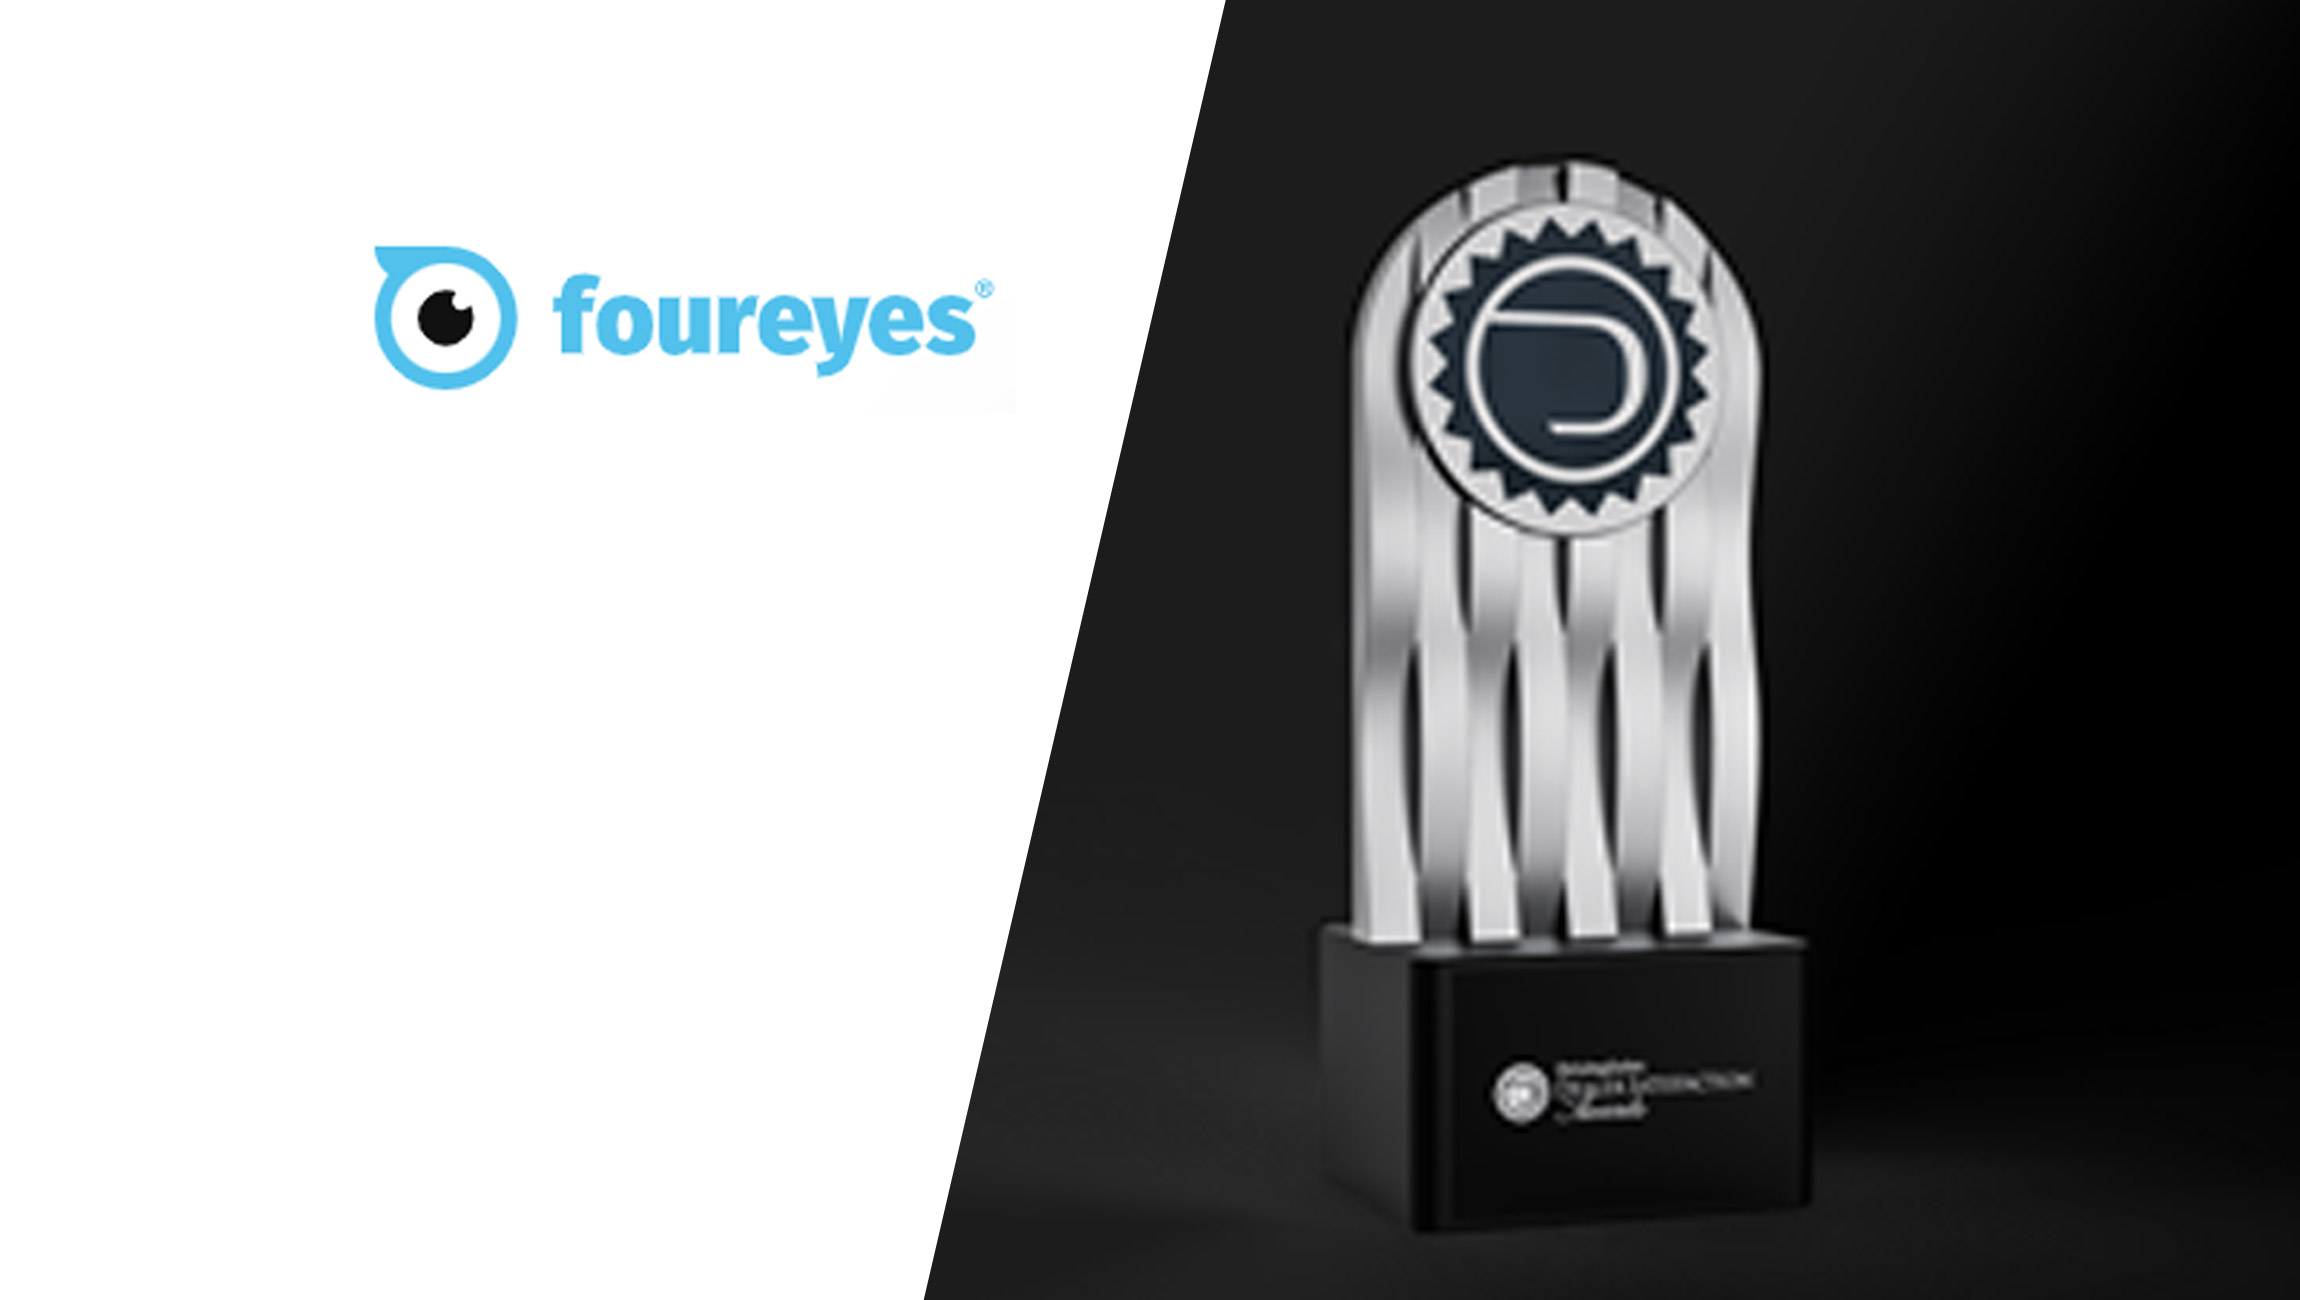 Foureyes Receives 3rd Consecutive Top Rated DrivingSales Dealer Satisfaction Award